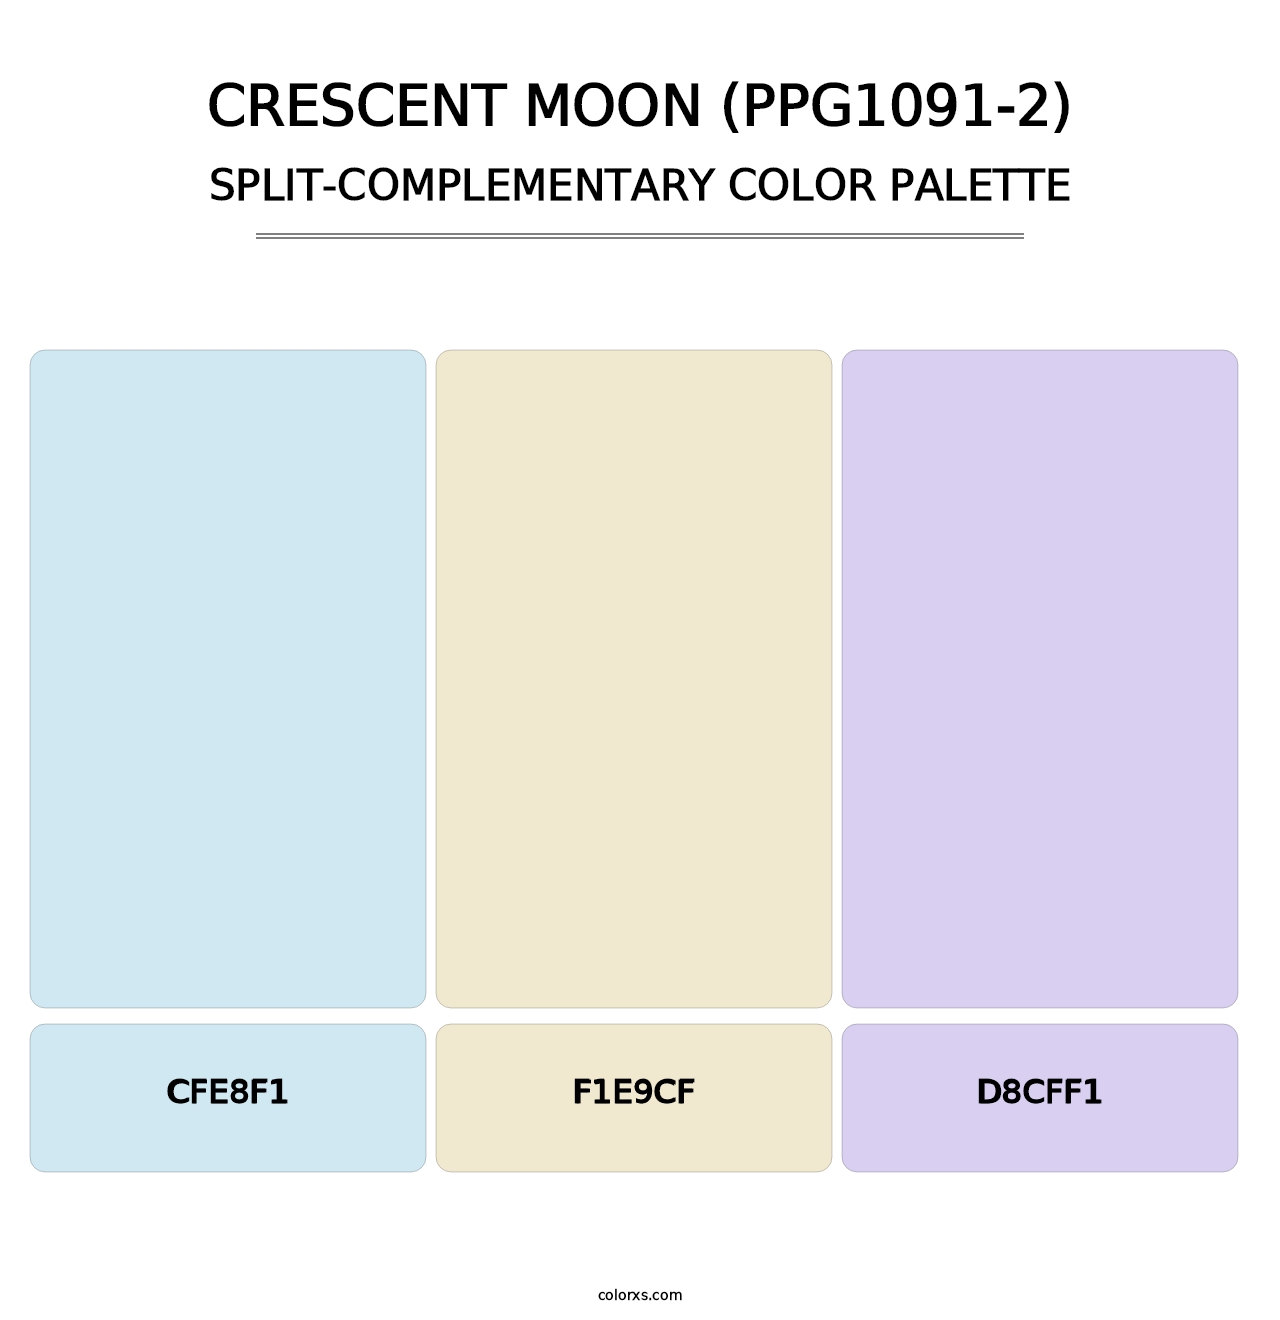 Crescent Moon (PPG1091-2) - Split-Complementary Color Palette